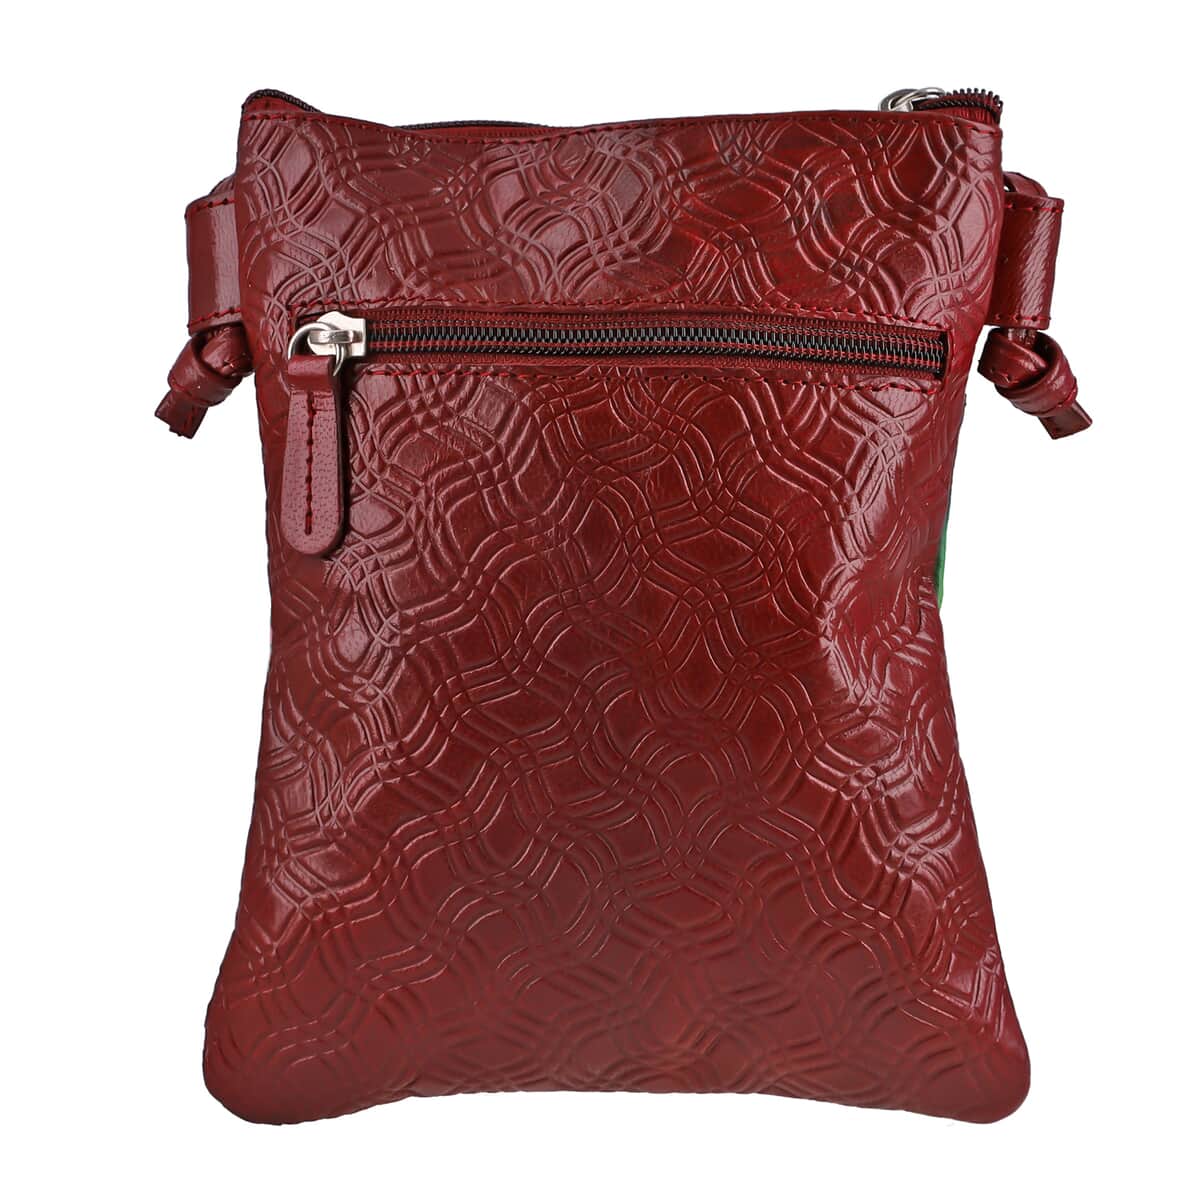 Buy VIVID by SUKRITI Dark Gray Traditional Elephant Pattern Hand Painted Genuine  Leather Crossbody Bag at ShopLC.